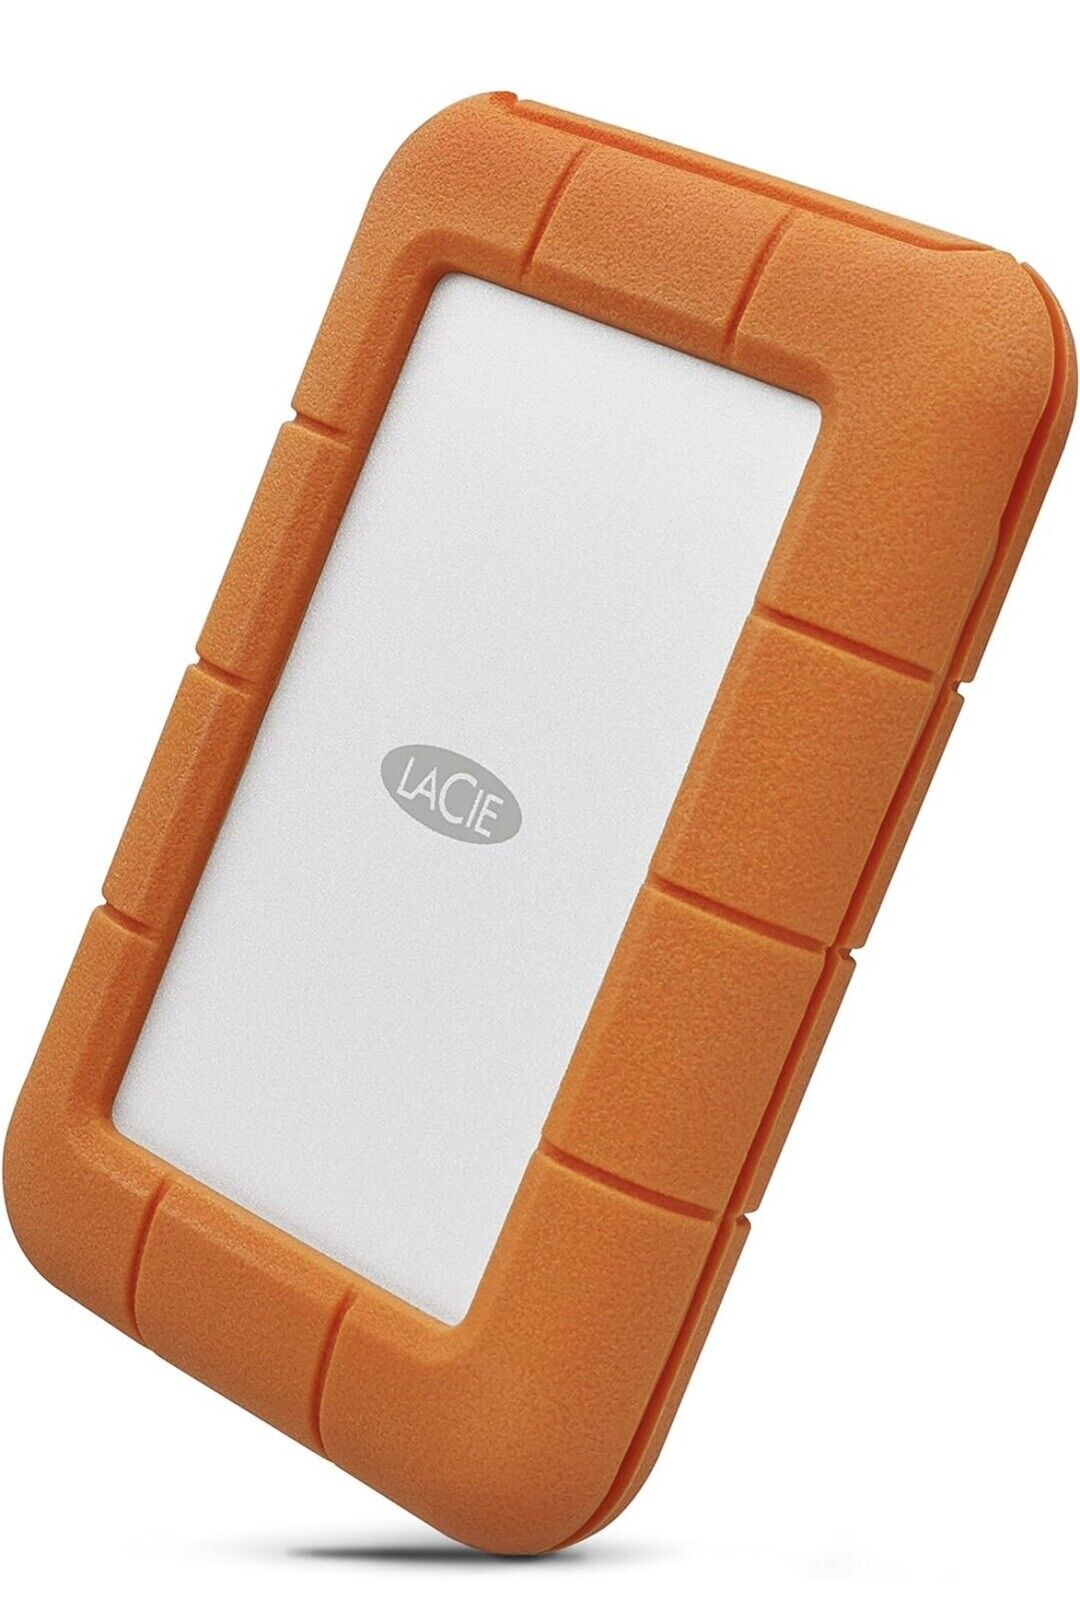 LaCie Rugged 5TB External USB-C 3.2 Portable Hard Drive (STFR5000800) - Sealed